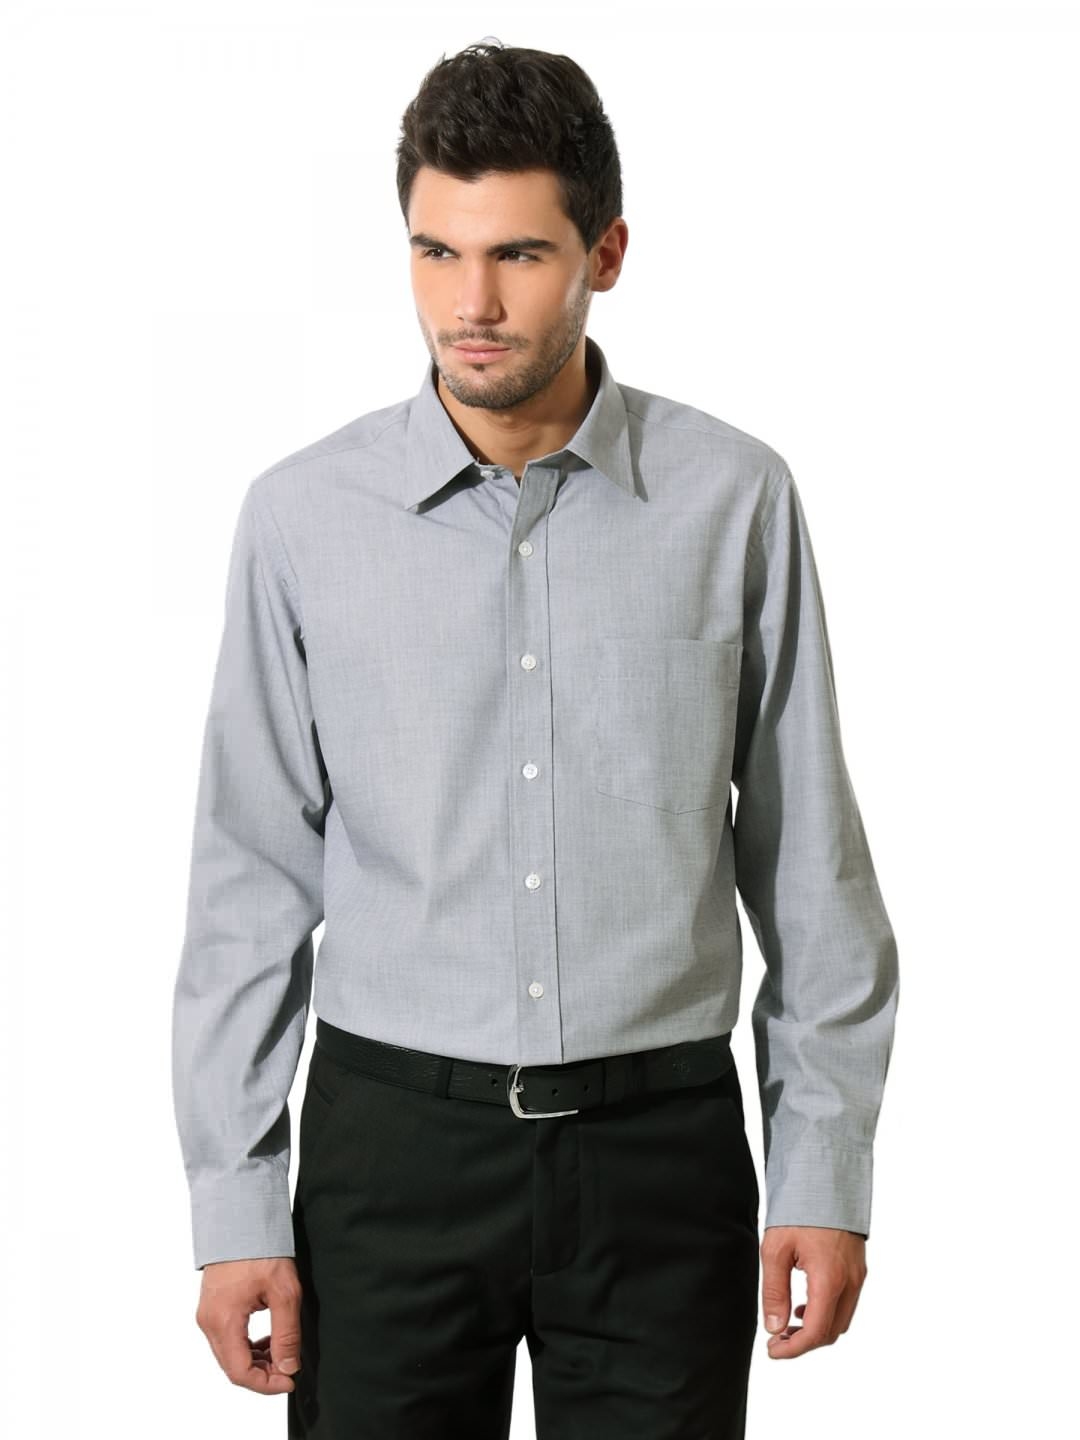 mens grey shirt outfit